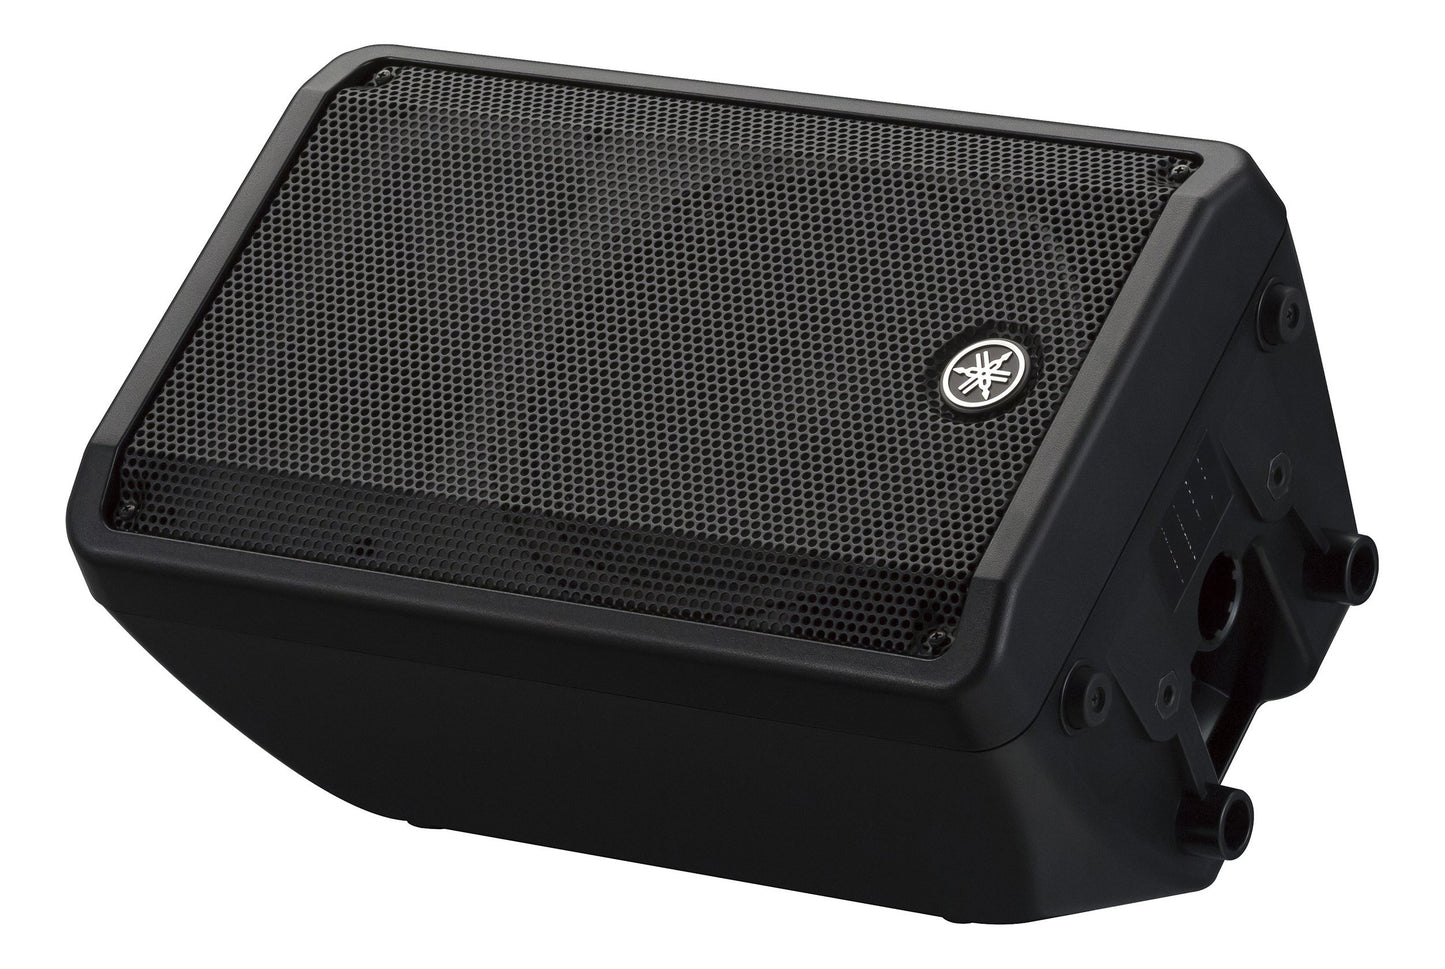 Yamaha CBR10 10" 2-Way Speaker